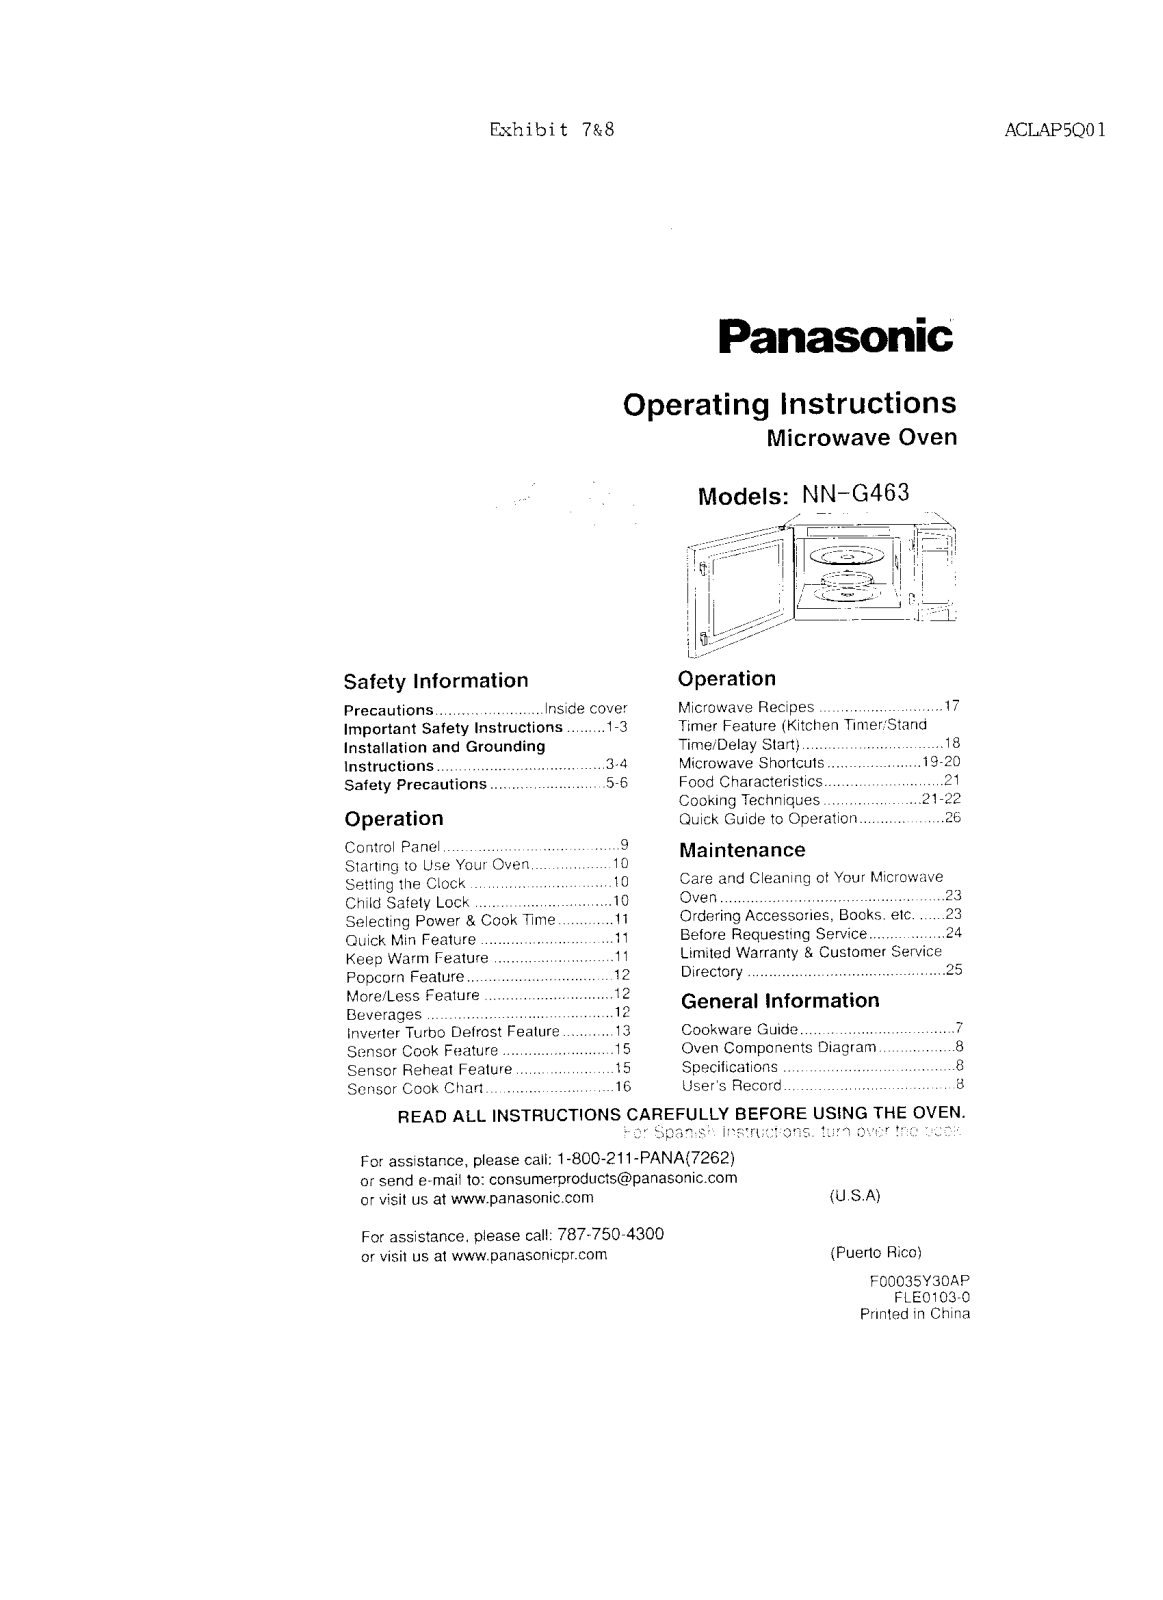 Panasonic AP5Q01 Users Manual